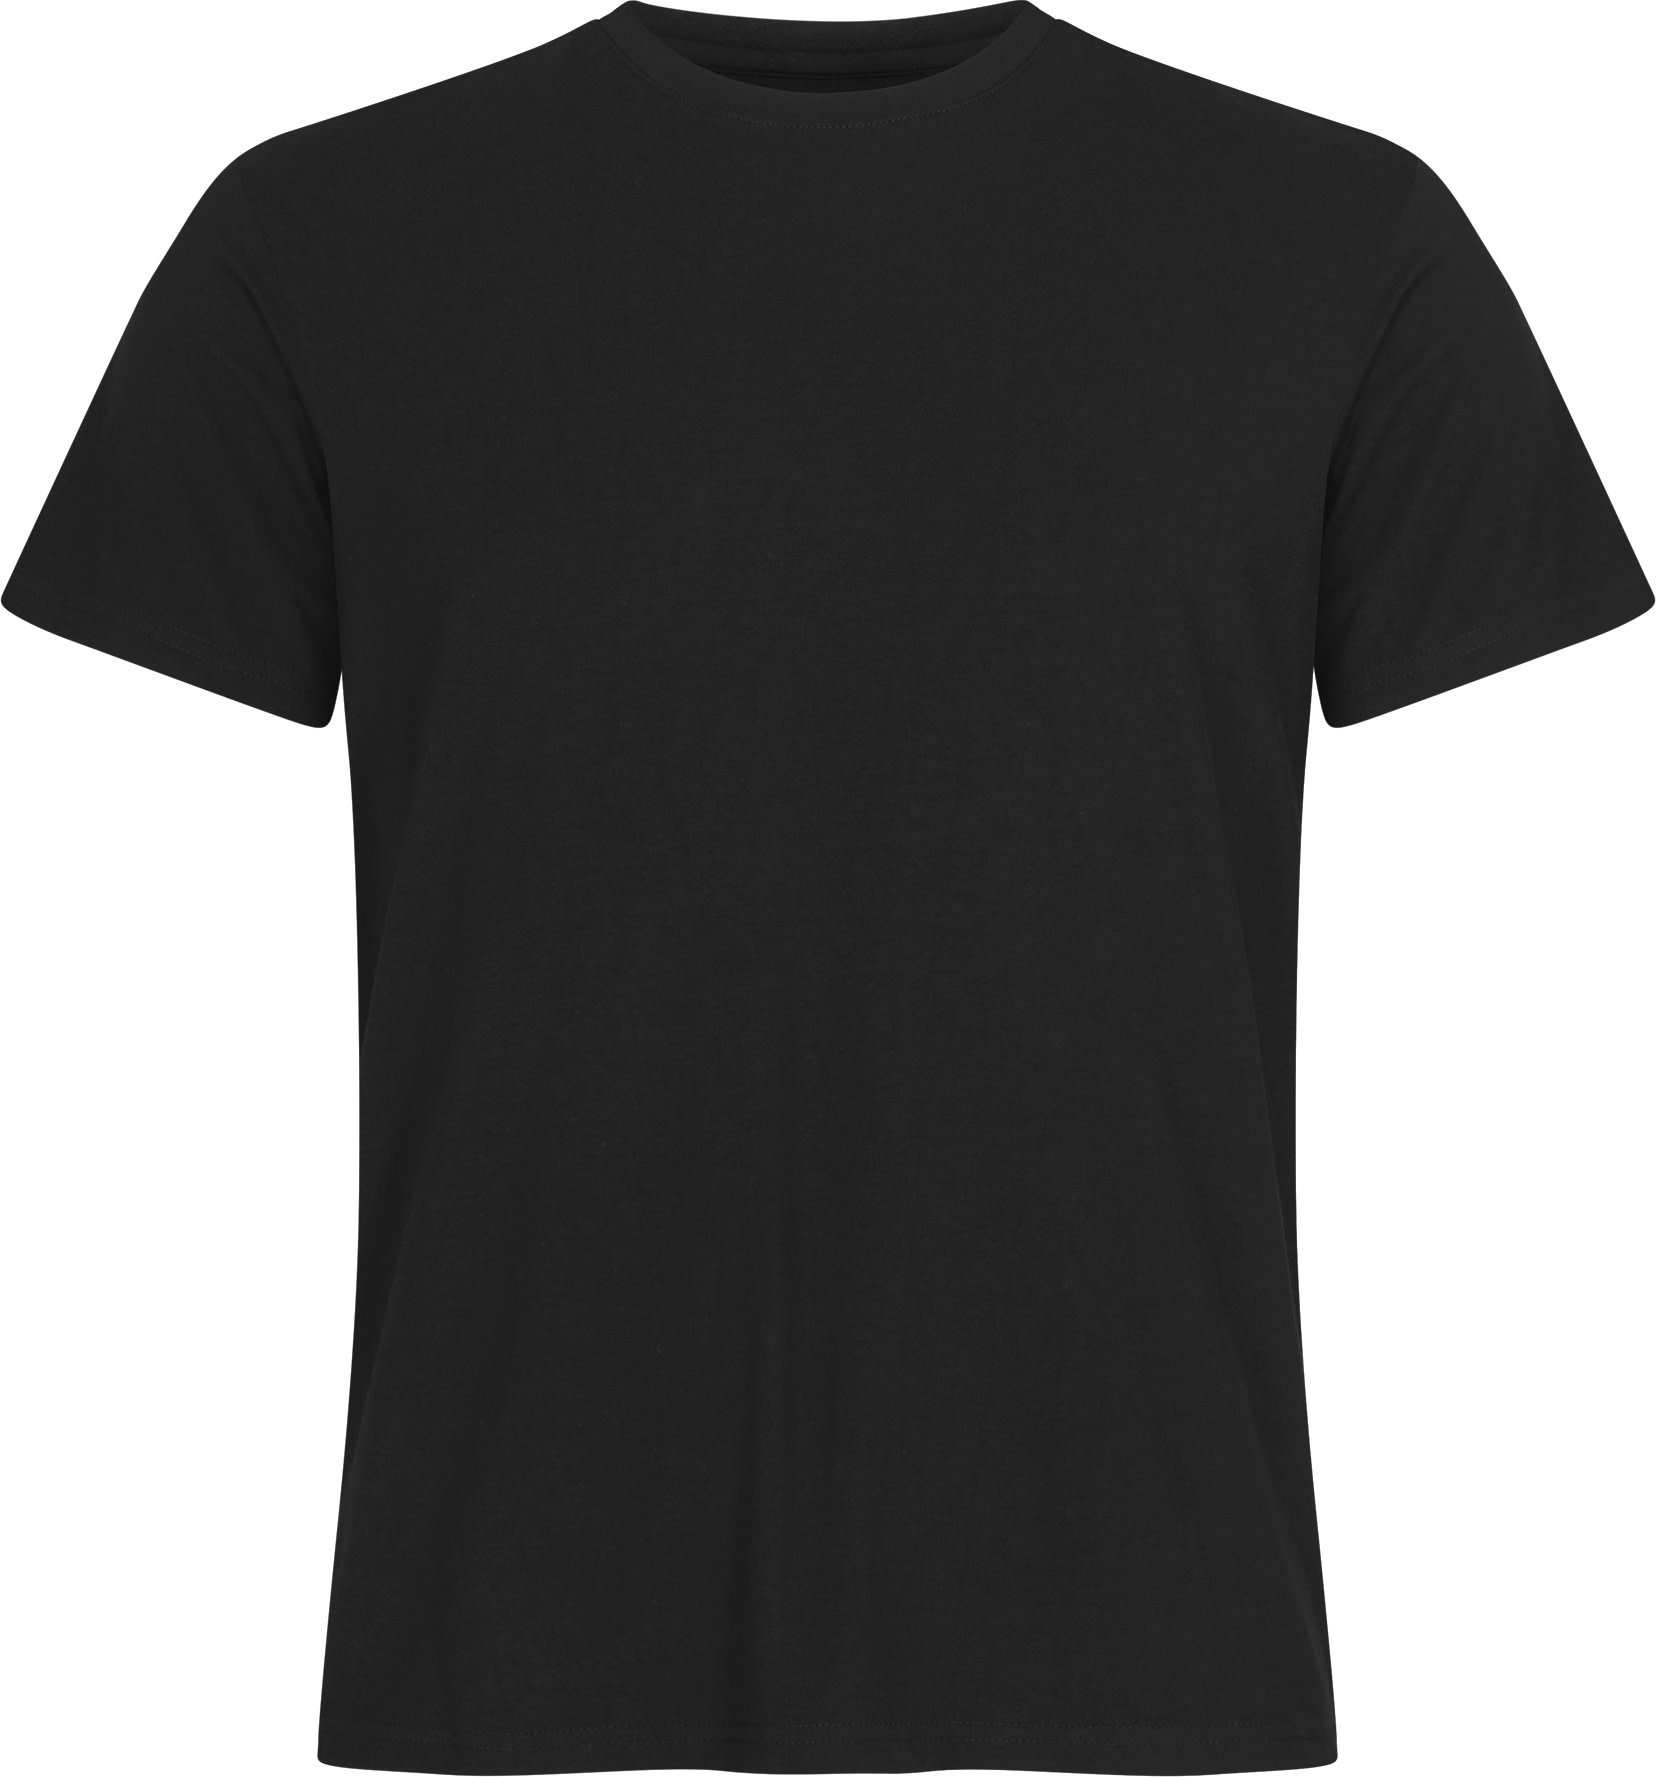 Urberg Men’s Vidsel Bamboo T-Shirt BlackBeauty